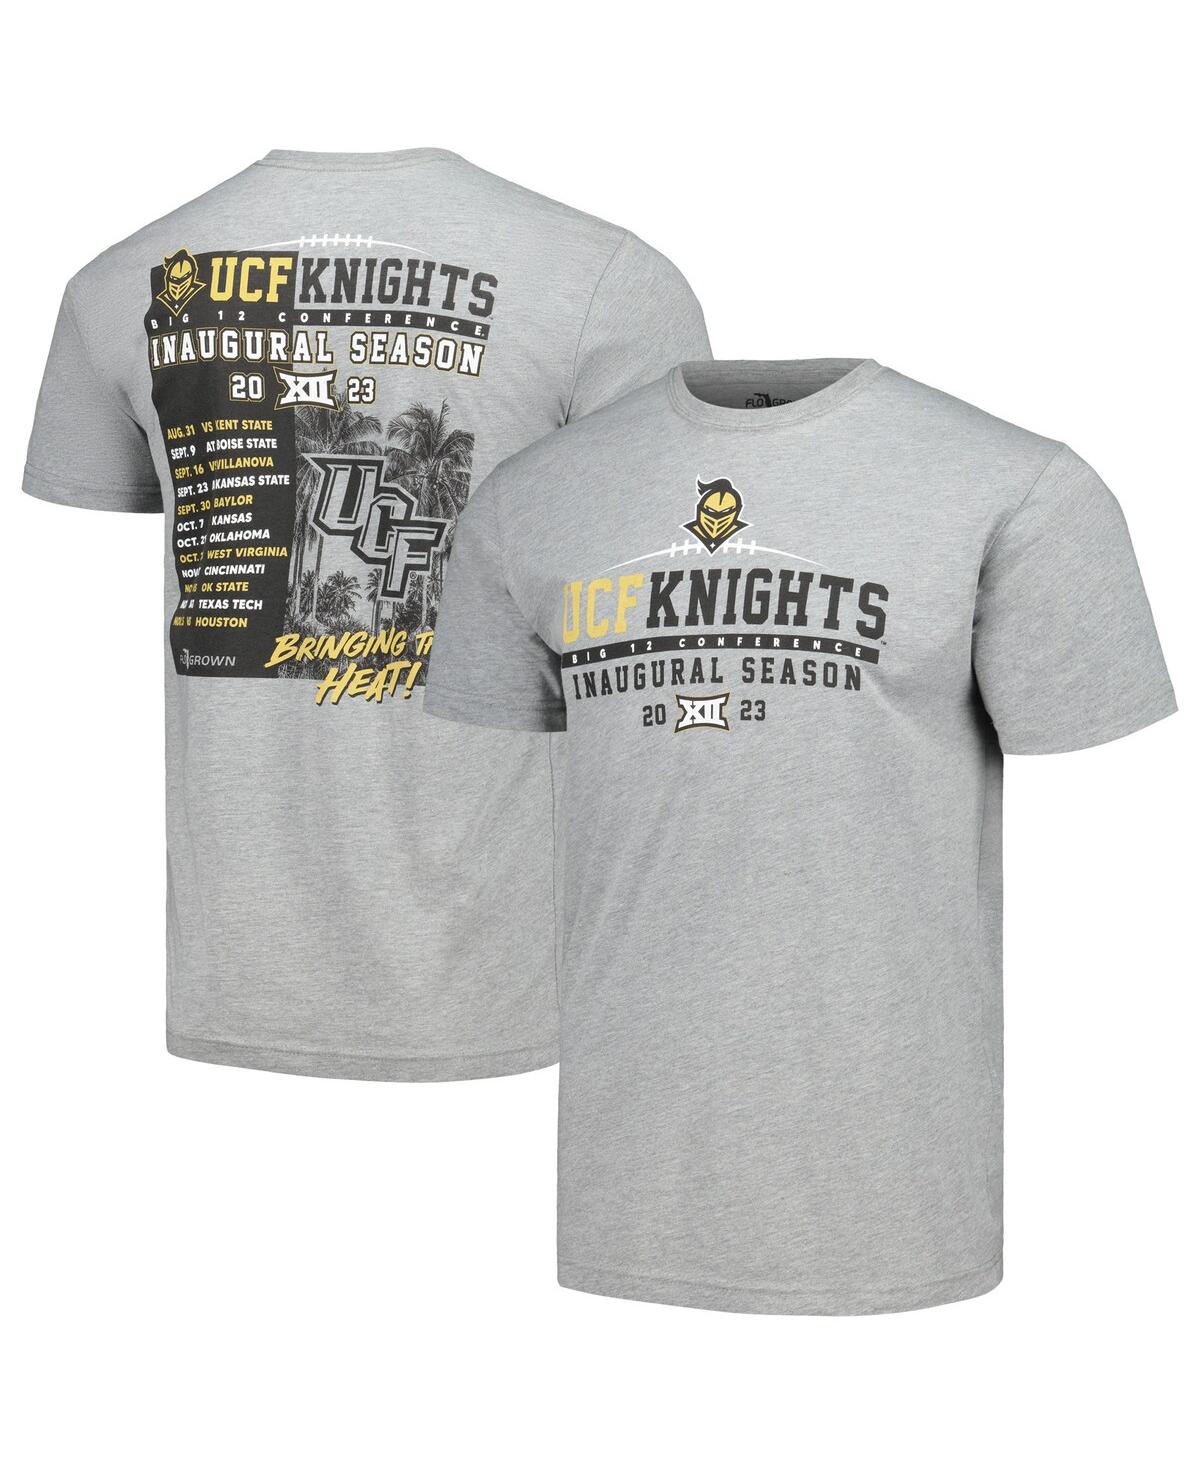 Men's Heather Gray Ucf Knights Inaugural Big 12 Schedule T-shirt - Heather Gray